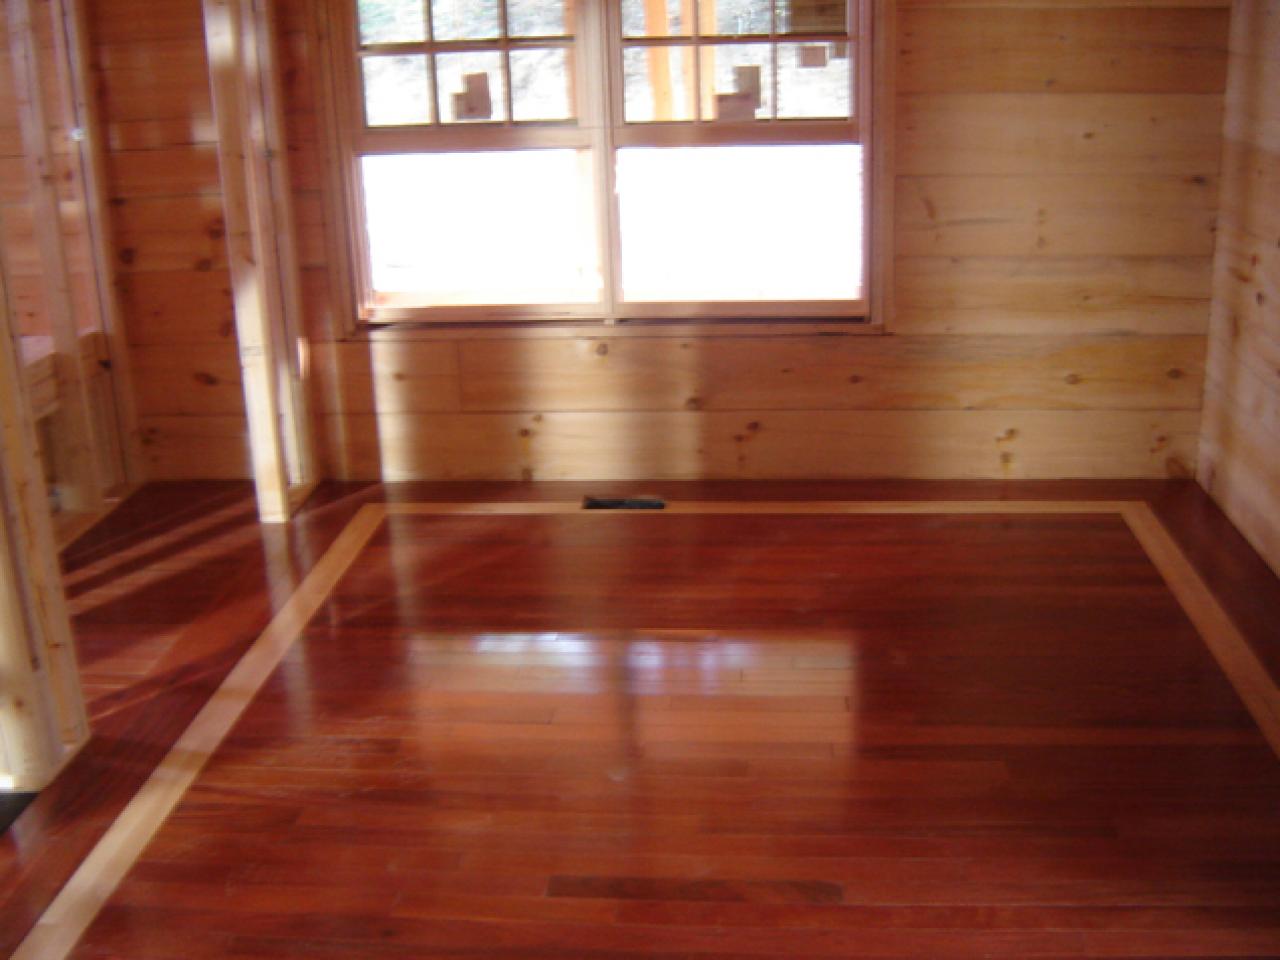 How To Install Hardwood Flooring, Hardwood Floor Covered In Tar